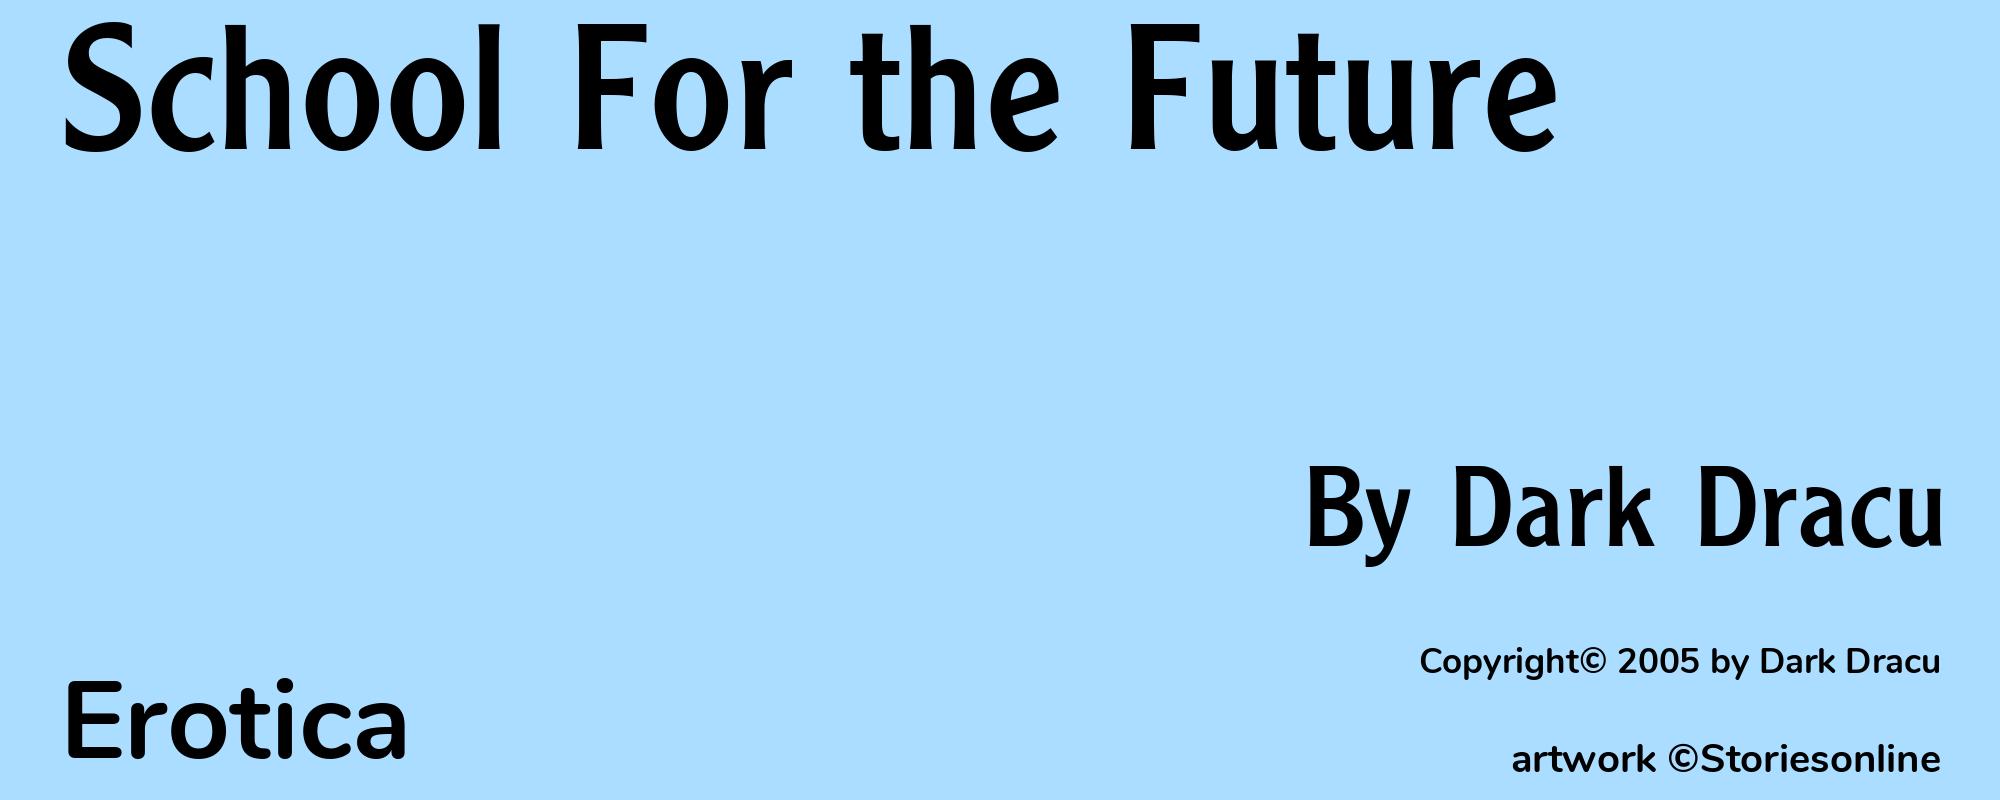 School For the Future - Cover